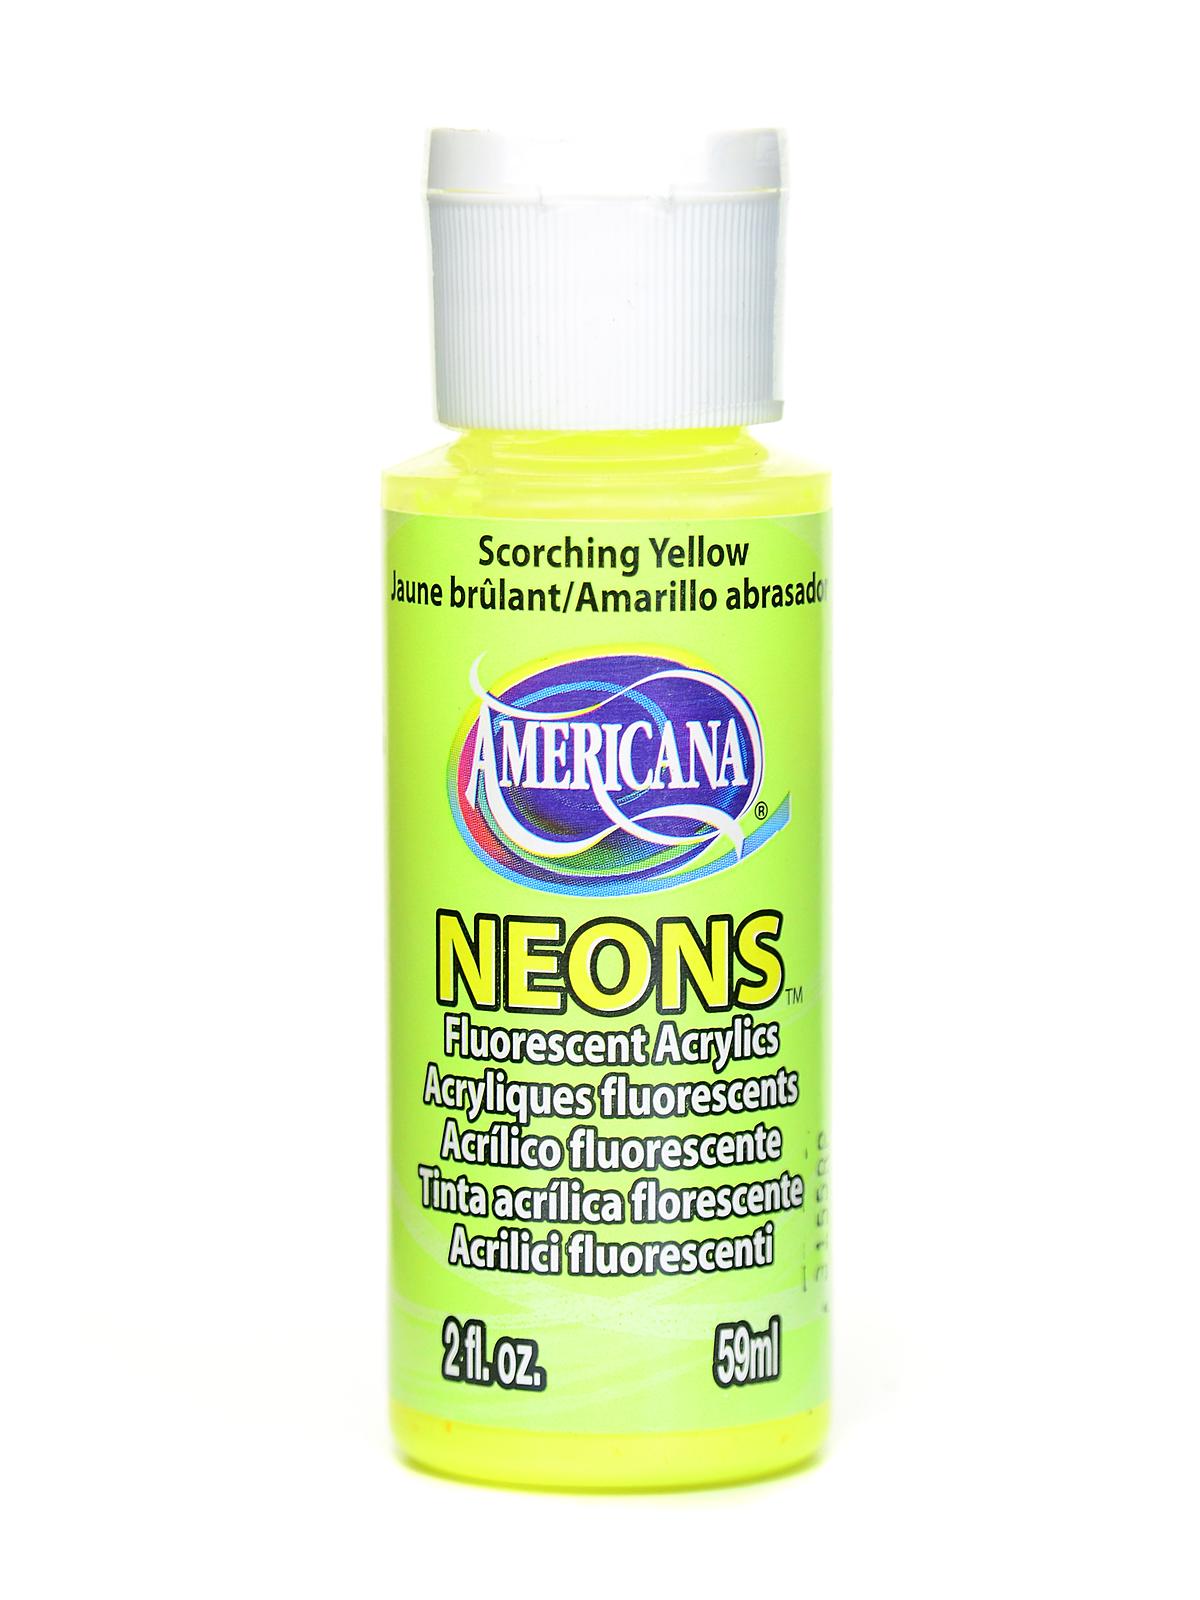 Americana® Neons Fluorescent Acrylic Paint, 2oz.